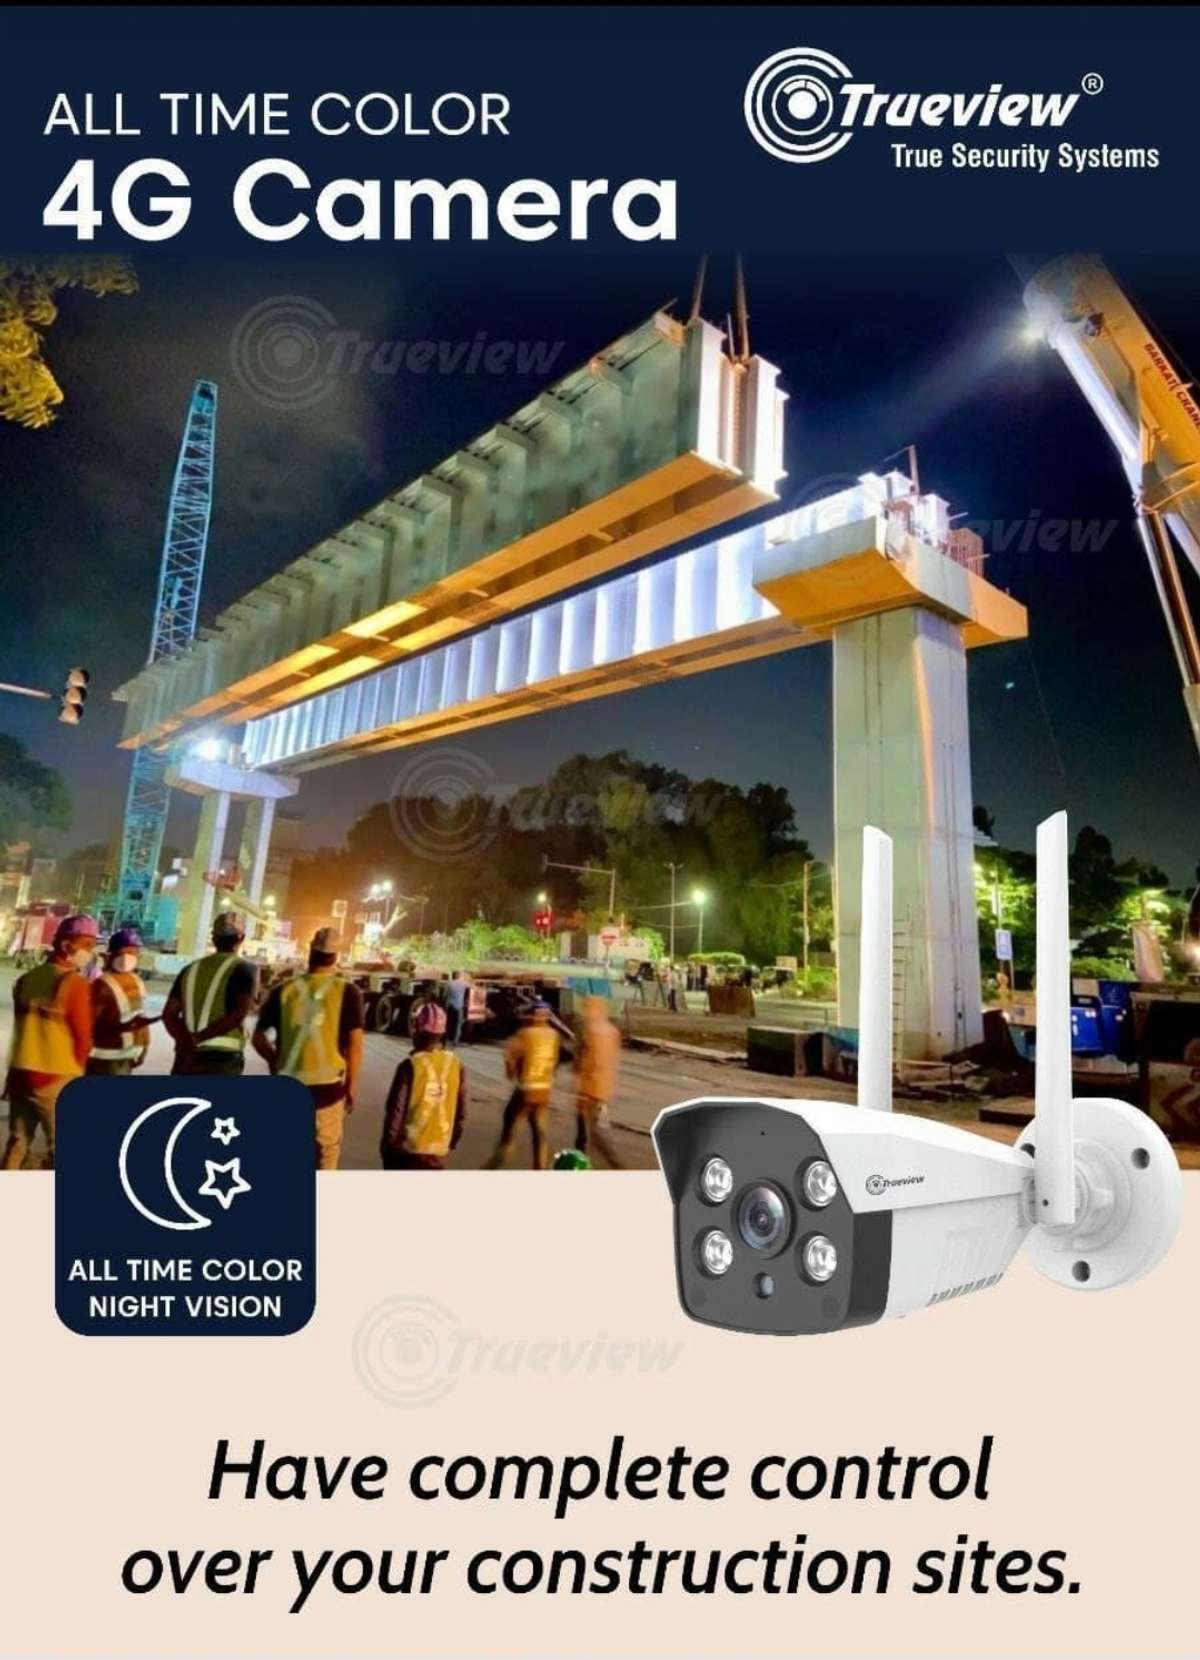 All Time Color 4G CCTV Camera. Email: safewaysolutionsgurgaon@gmail.com